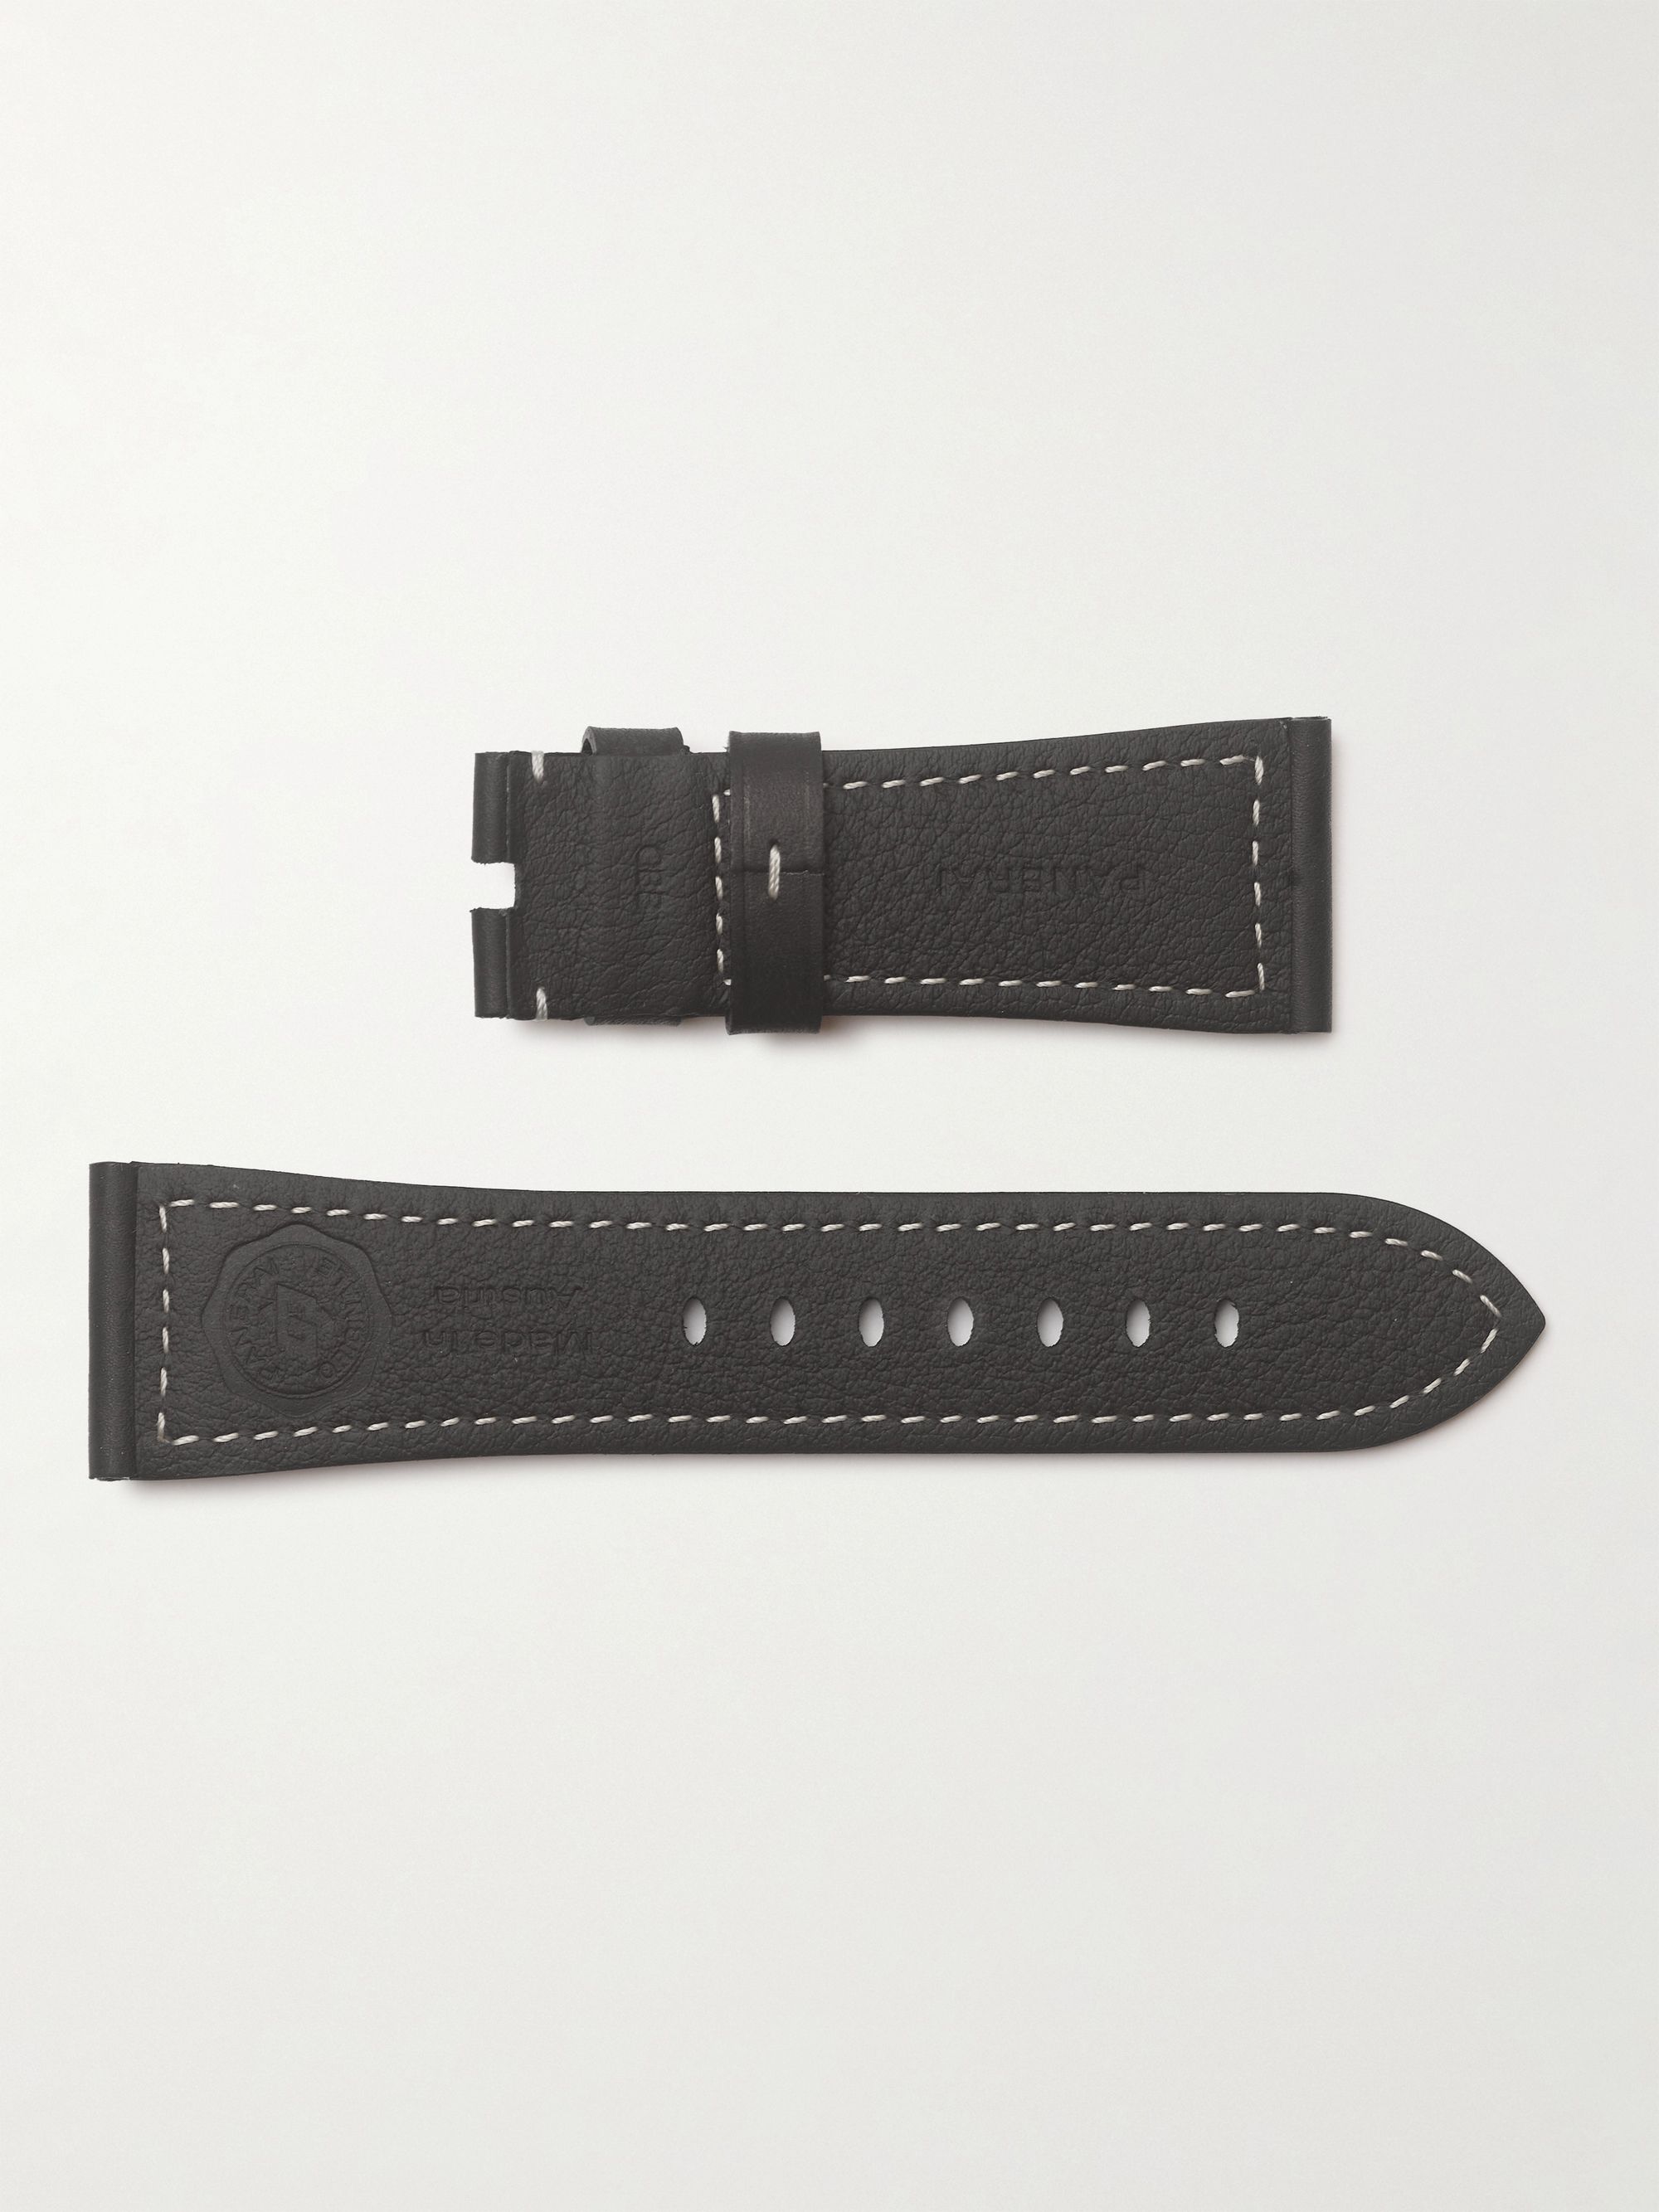 PANERAI Topstitched Leather Watch Strap